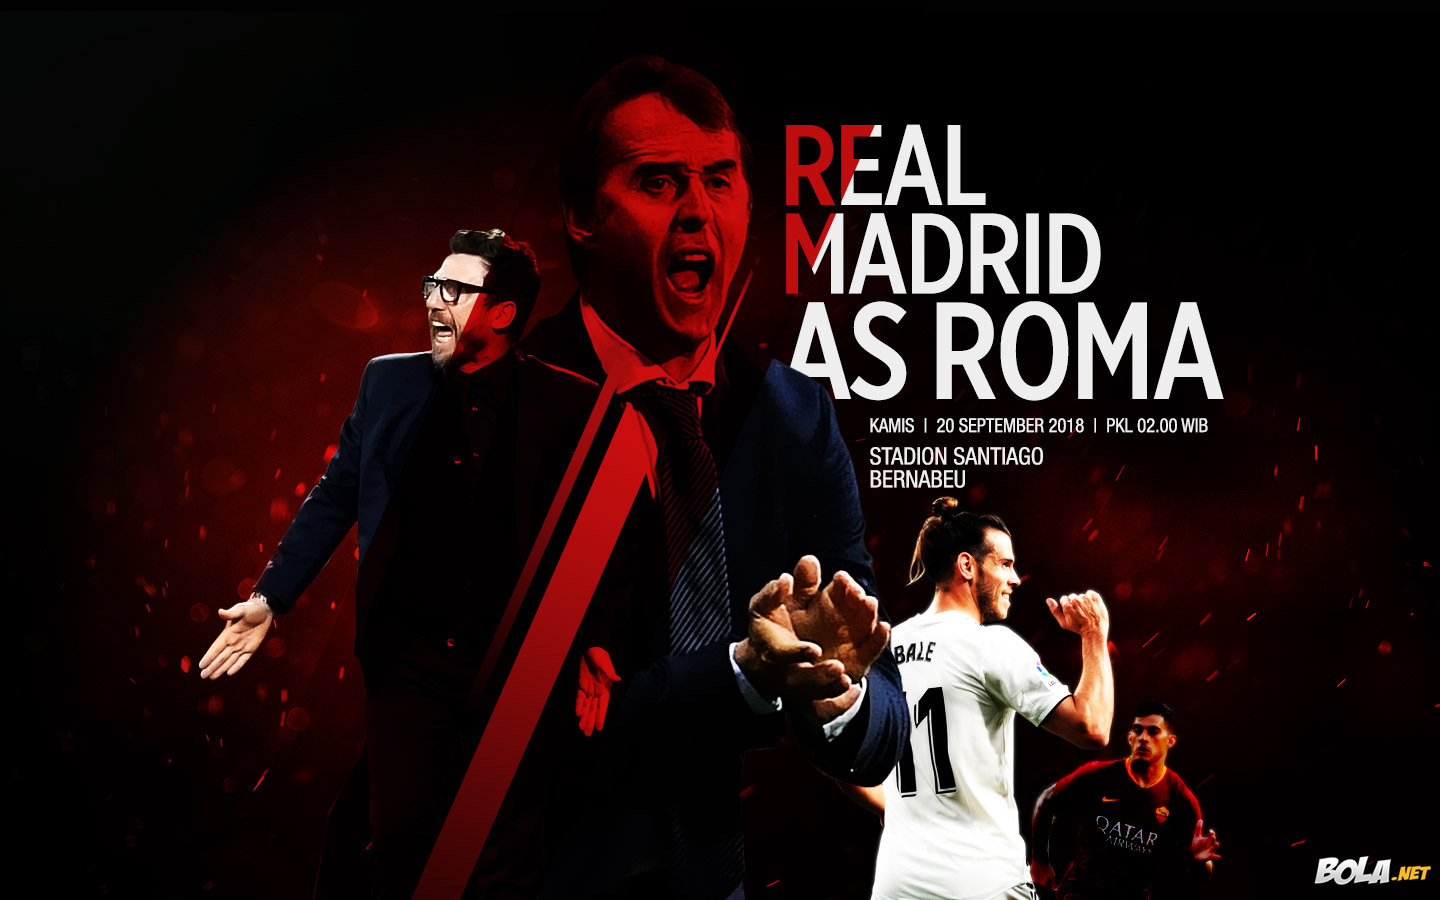 Deskripsi : Wallpaper Real Madrid Vs As Roma, size: 1440x900